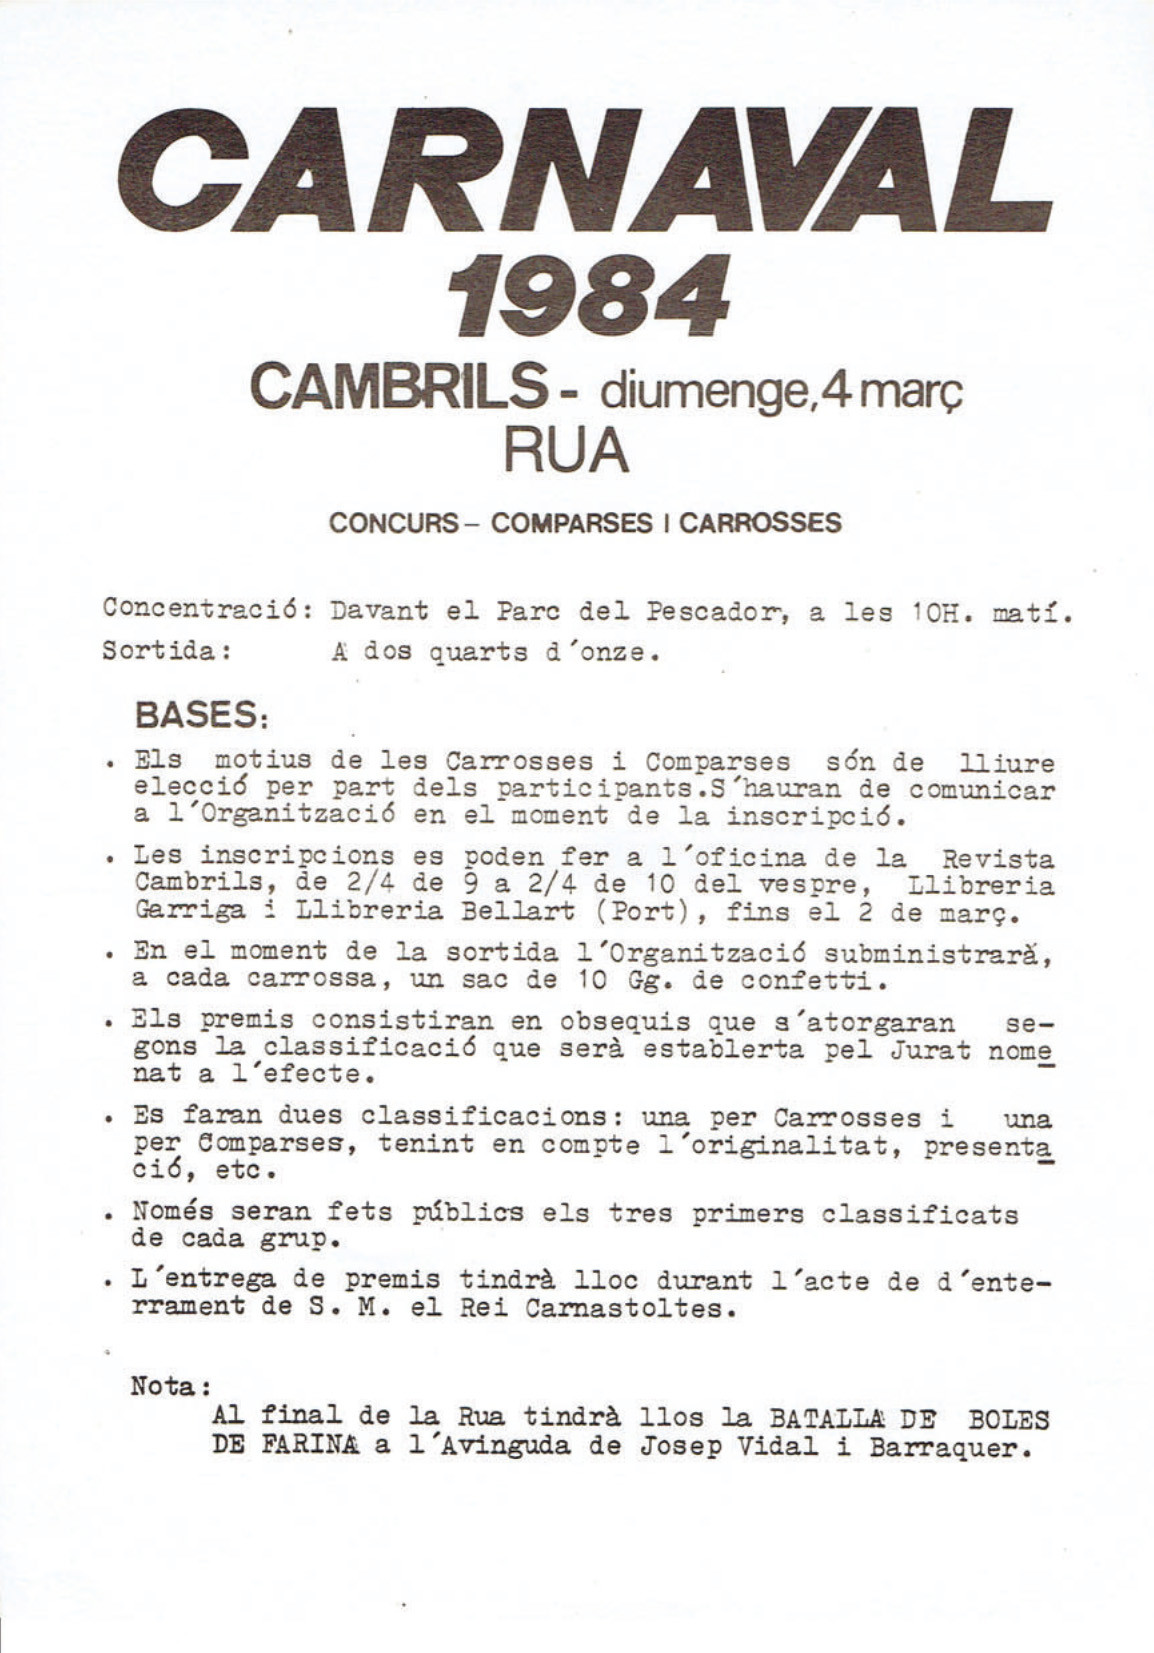 bases carnaval cambrils 1984